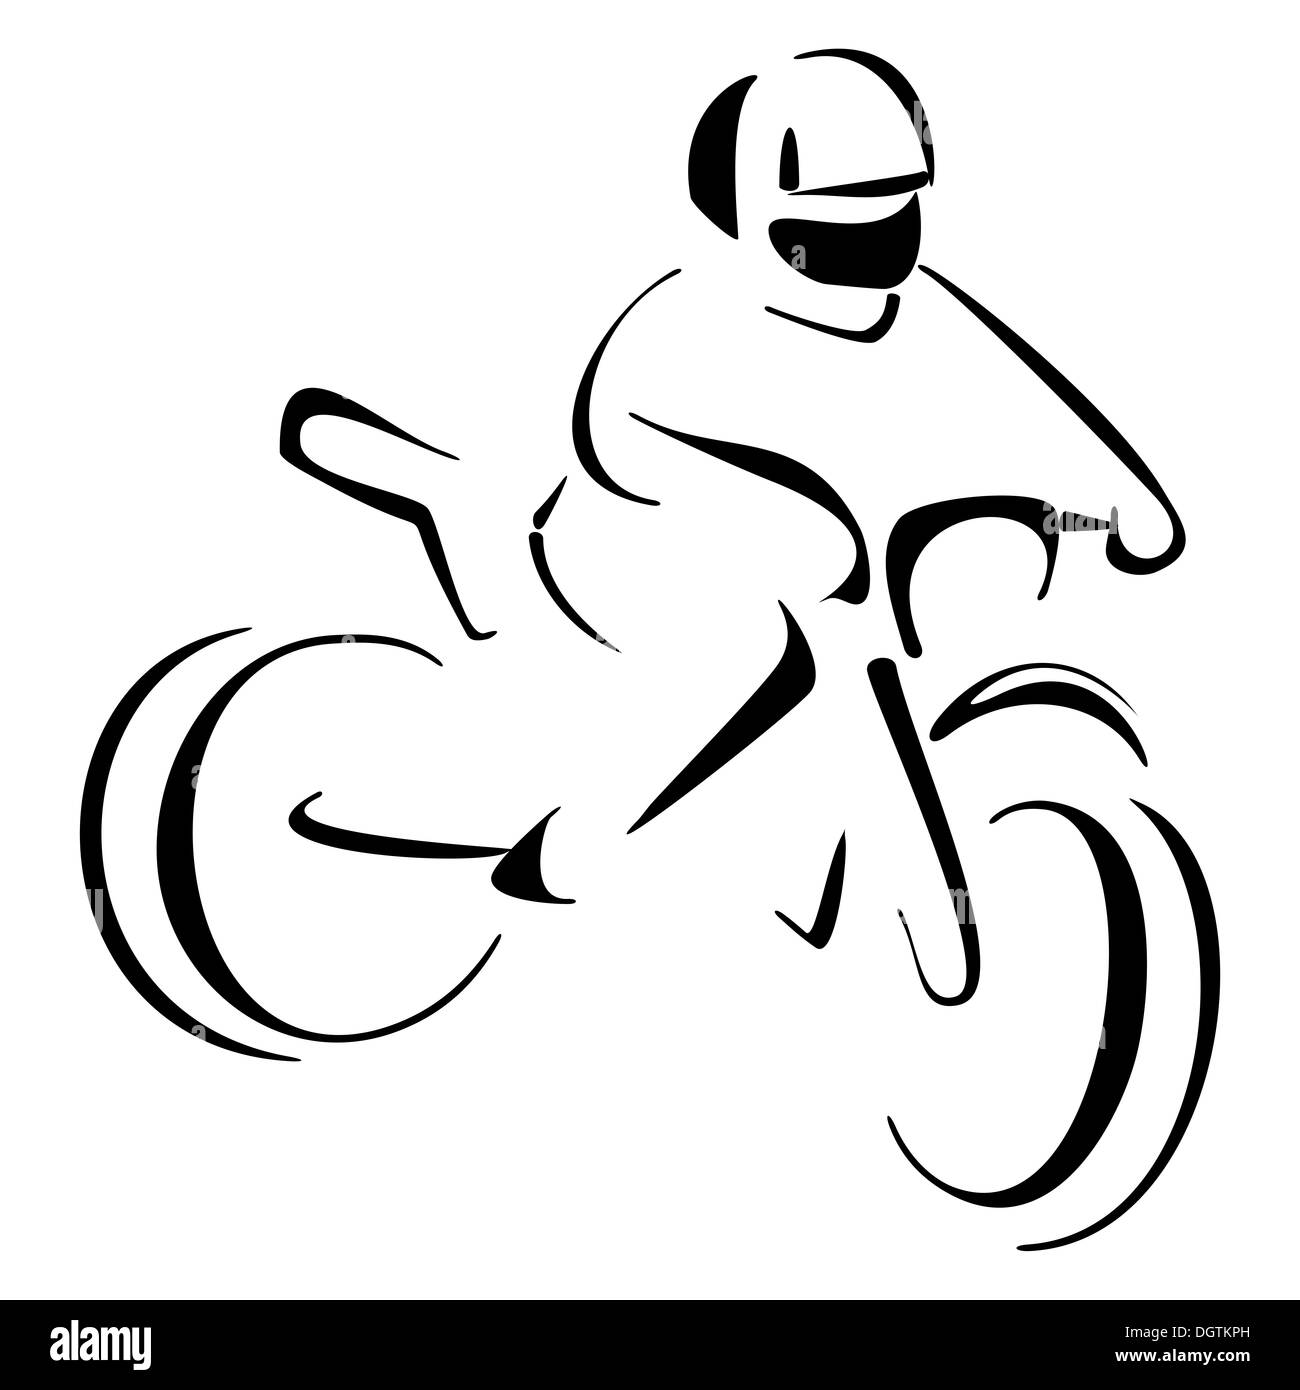 Motocross sport Stock Photo